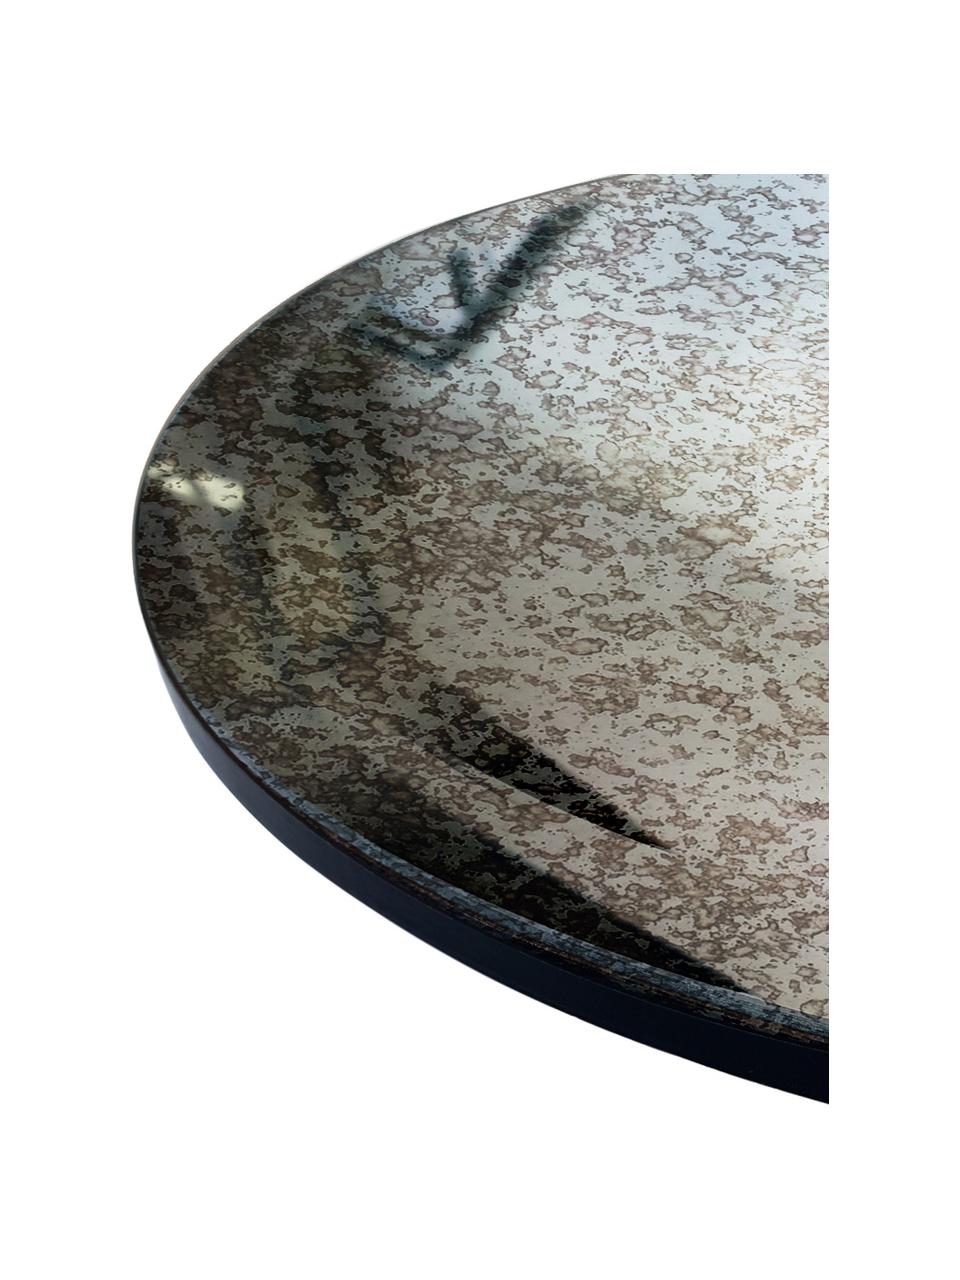 Lijstloze wandspiegel Oxidized in antieke optiek, Grijs, Ø 60 x D 3 cm